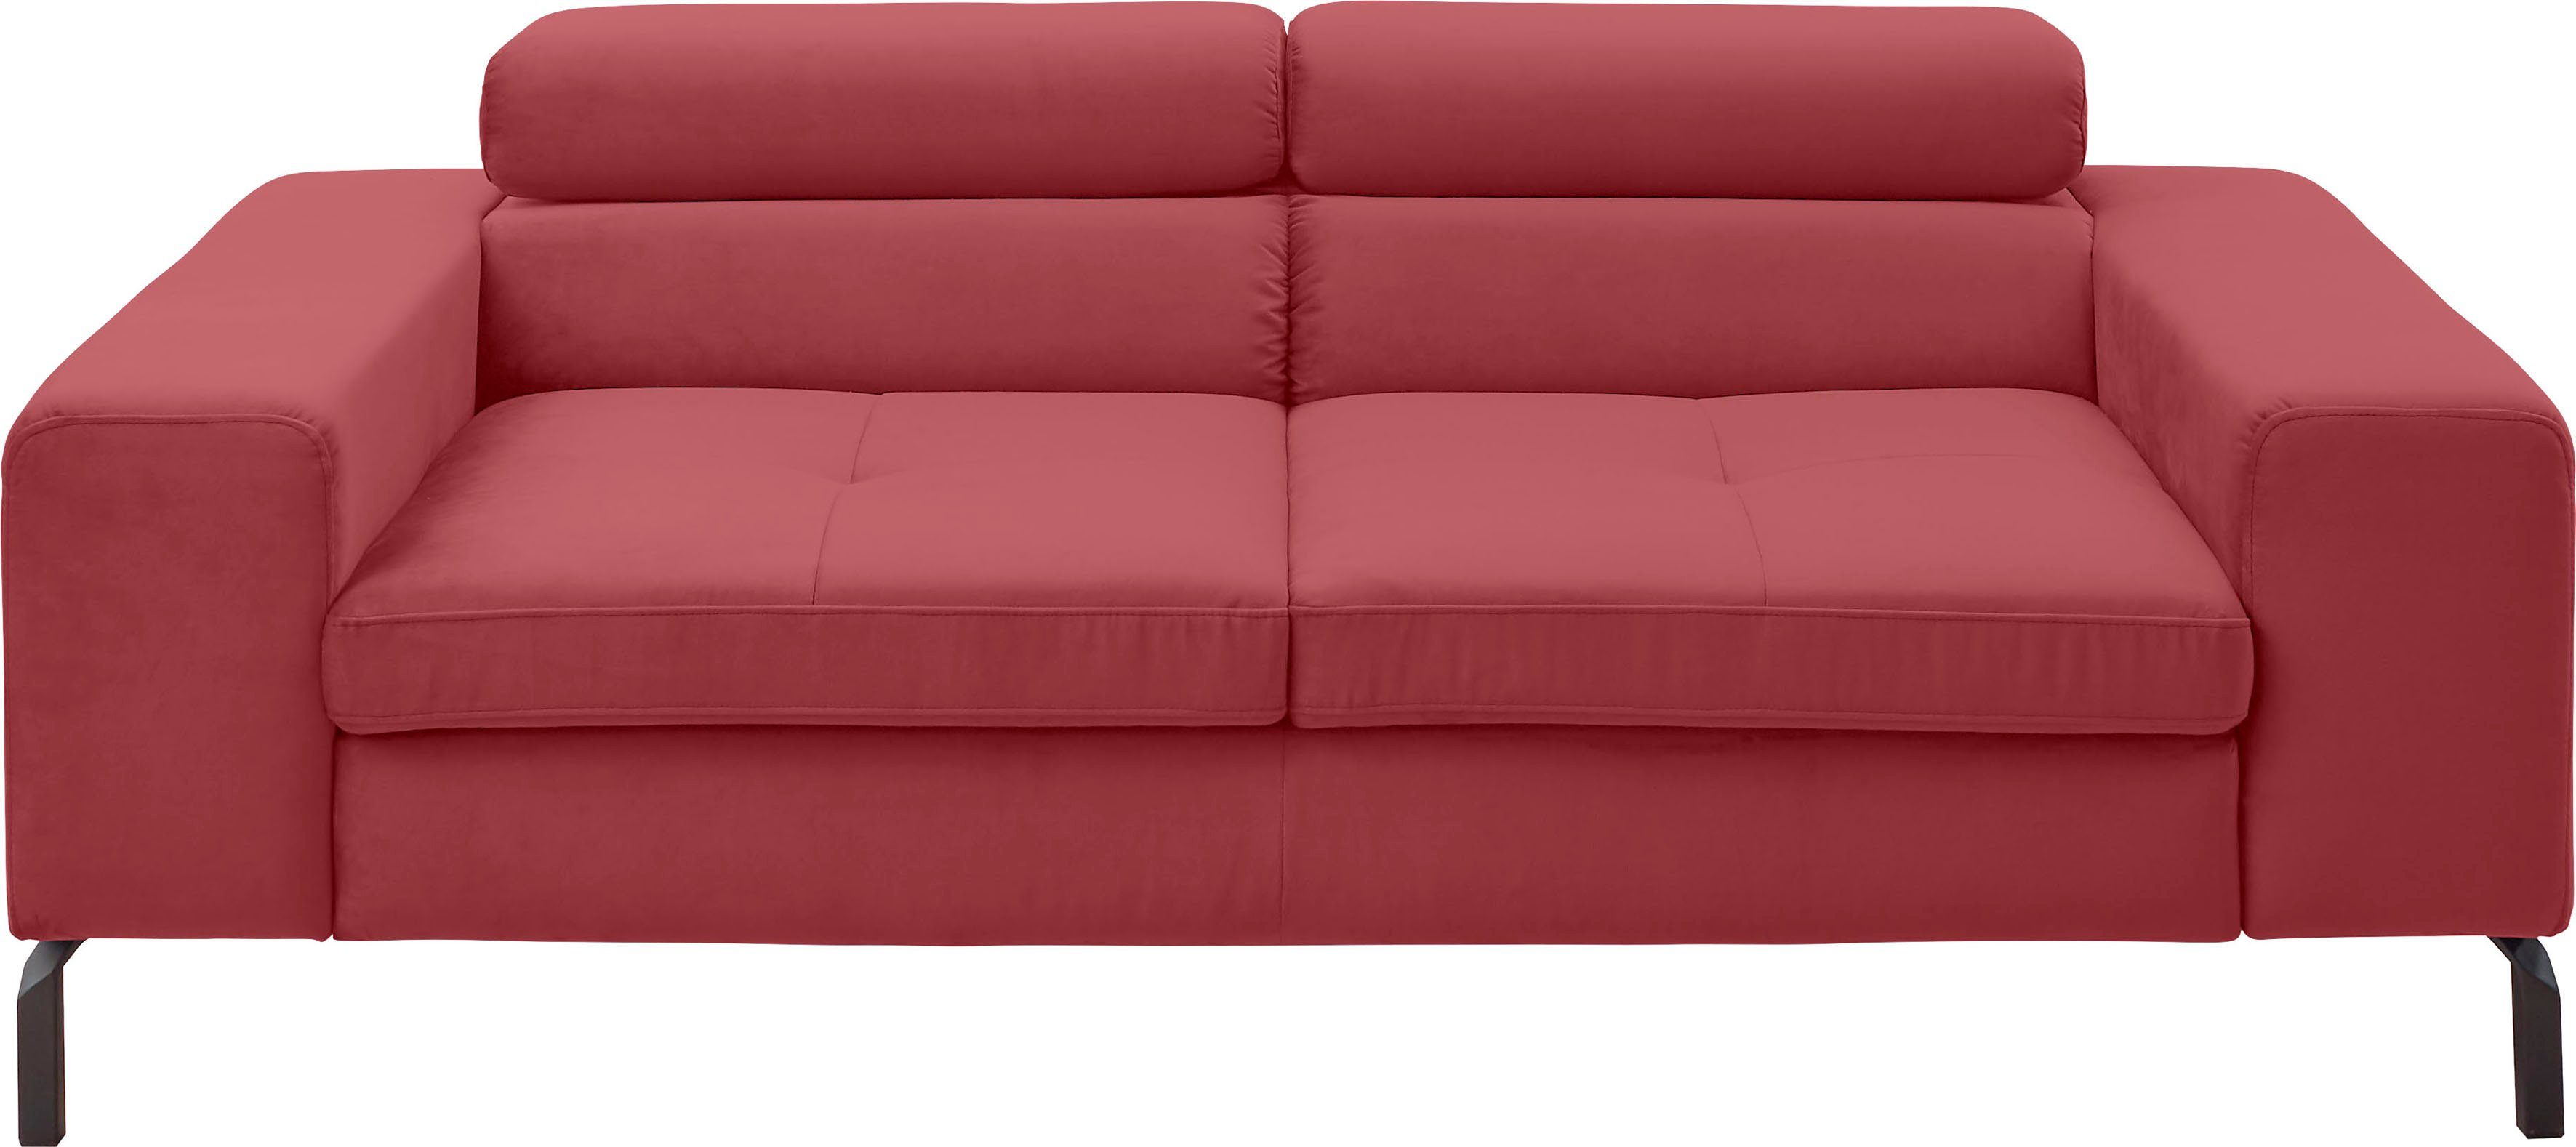 M branded 2-Sitzer Musterring mit red by GALLERY Due, Kopfteilverstellung Sitzvorzug, Wahlweise Felicia inklusive